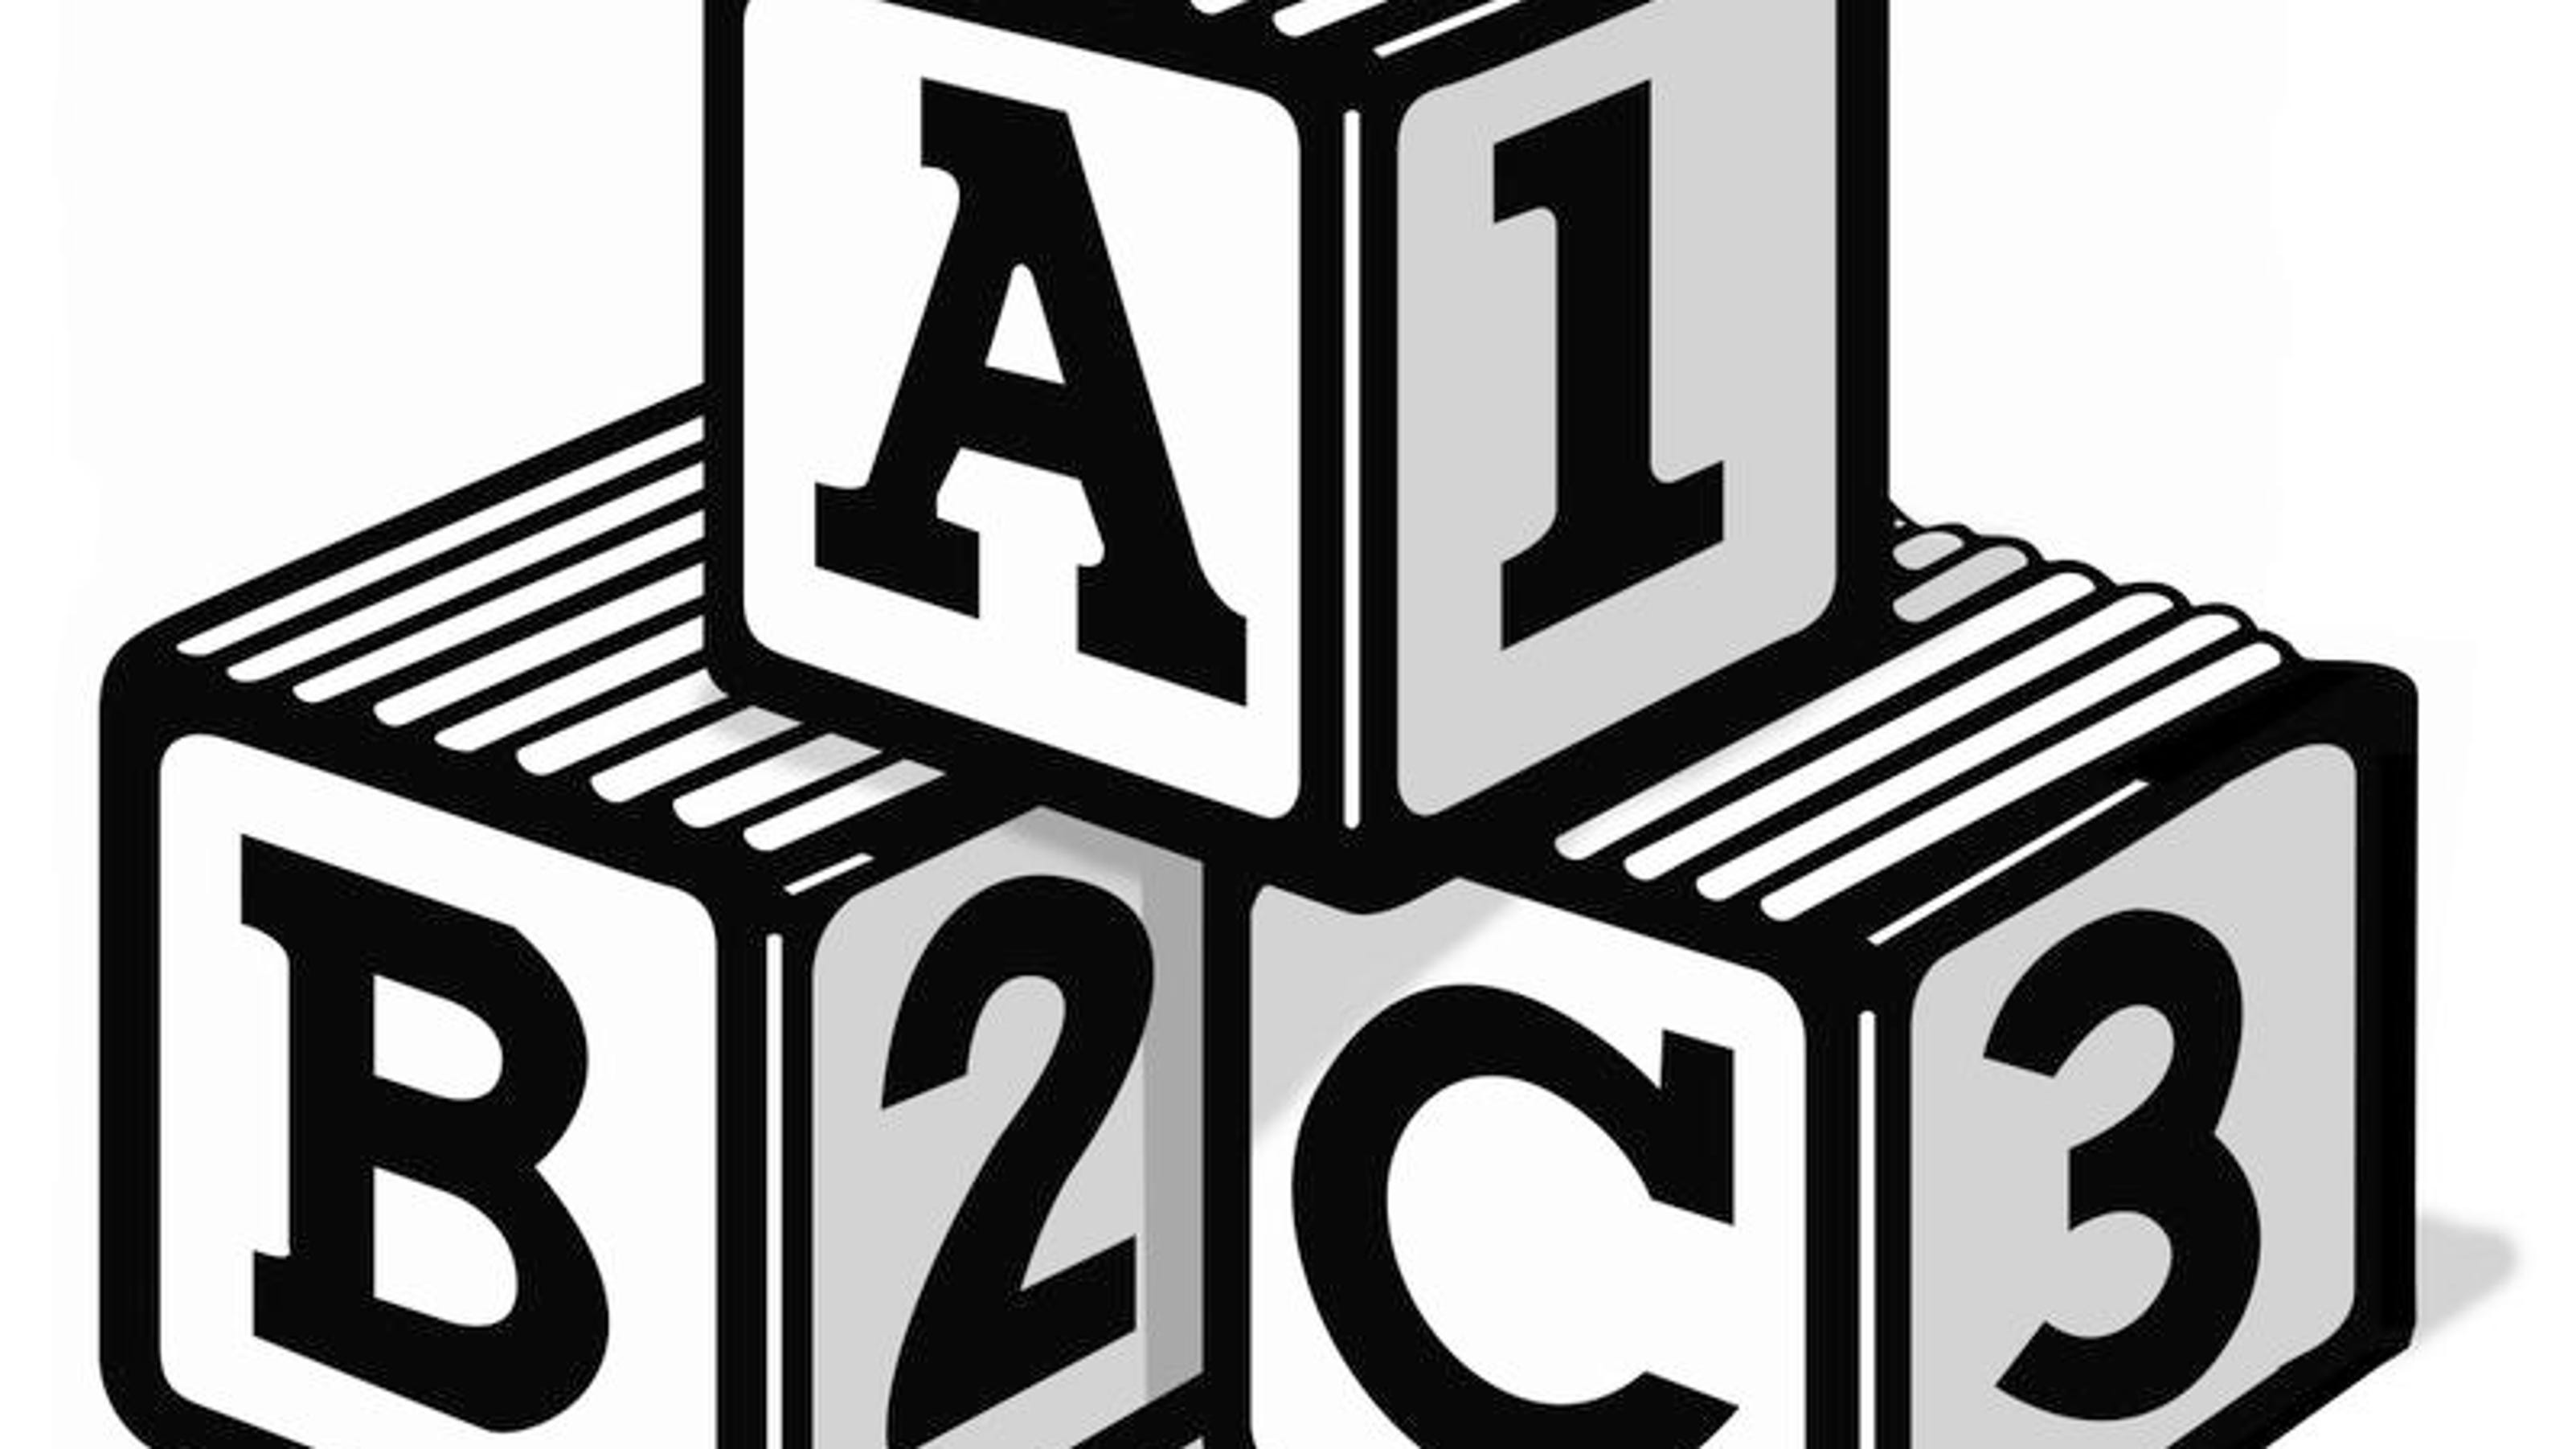 free clipart of abc blocks - photo #26